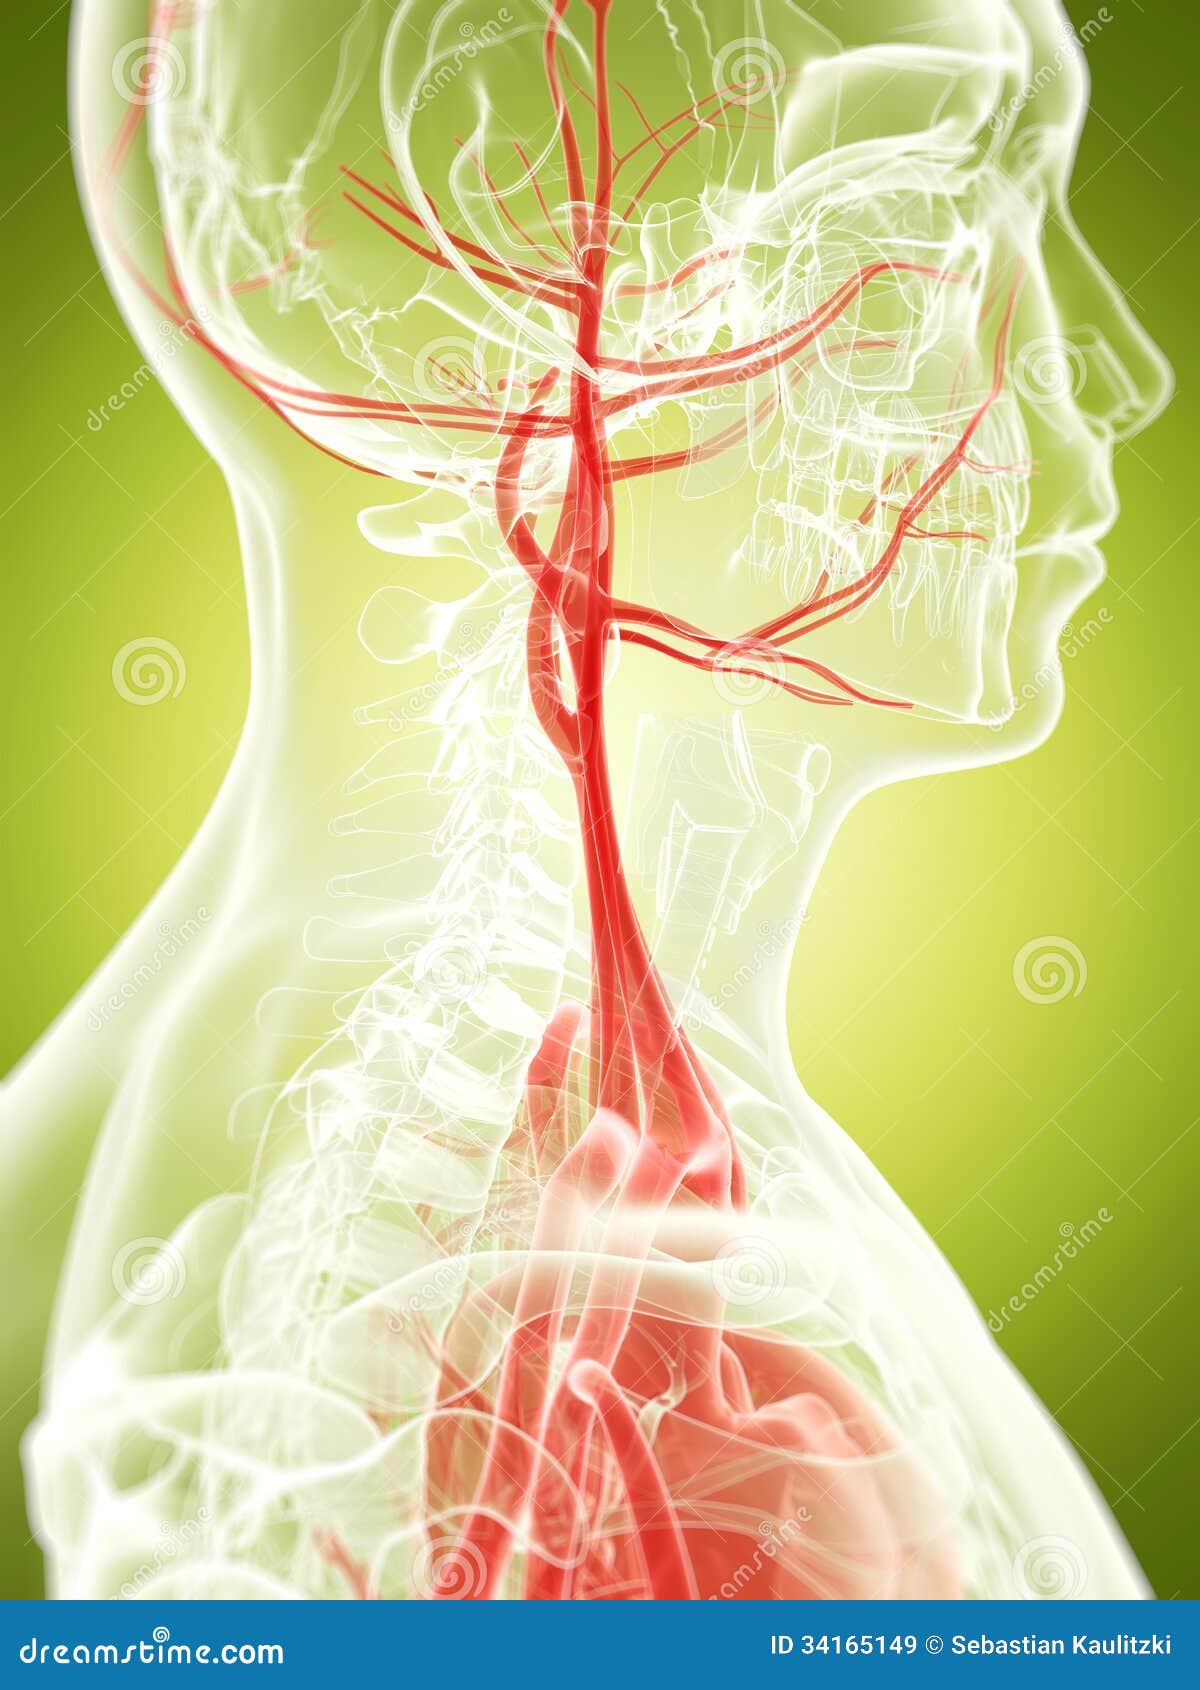 The vascular system stock illustration. Illustration of science - 34165149